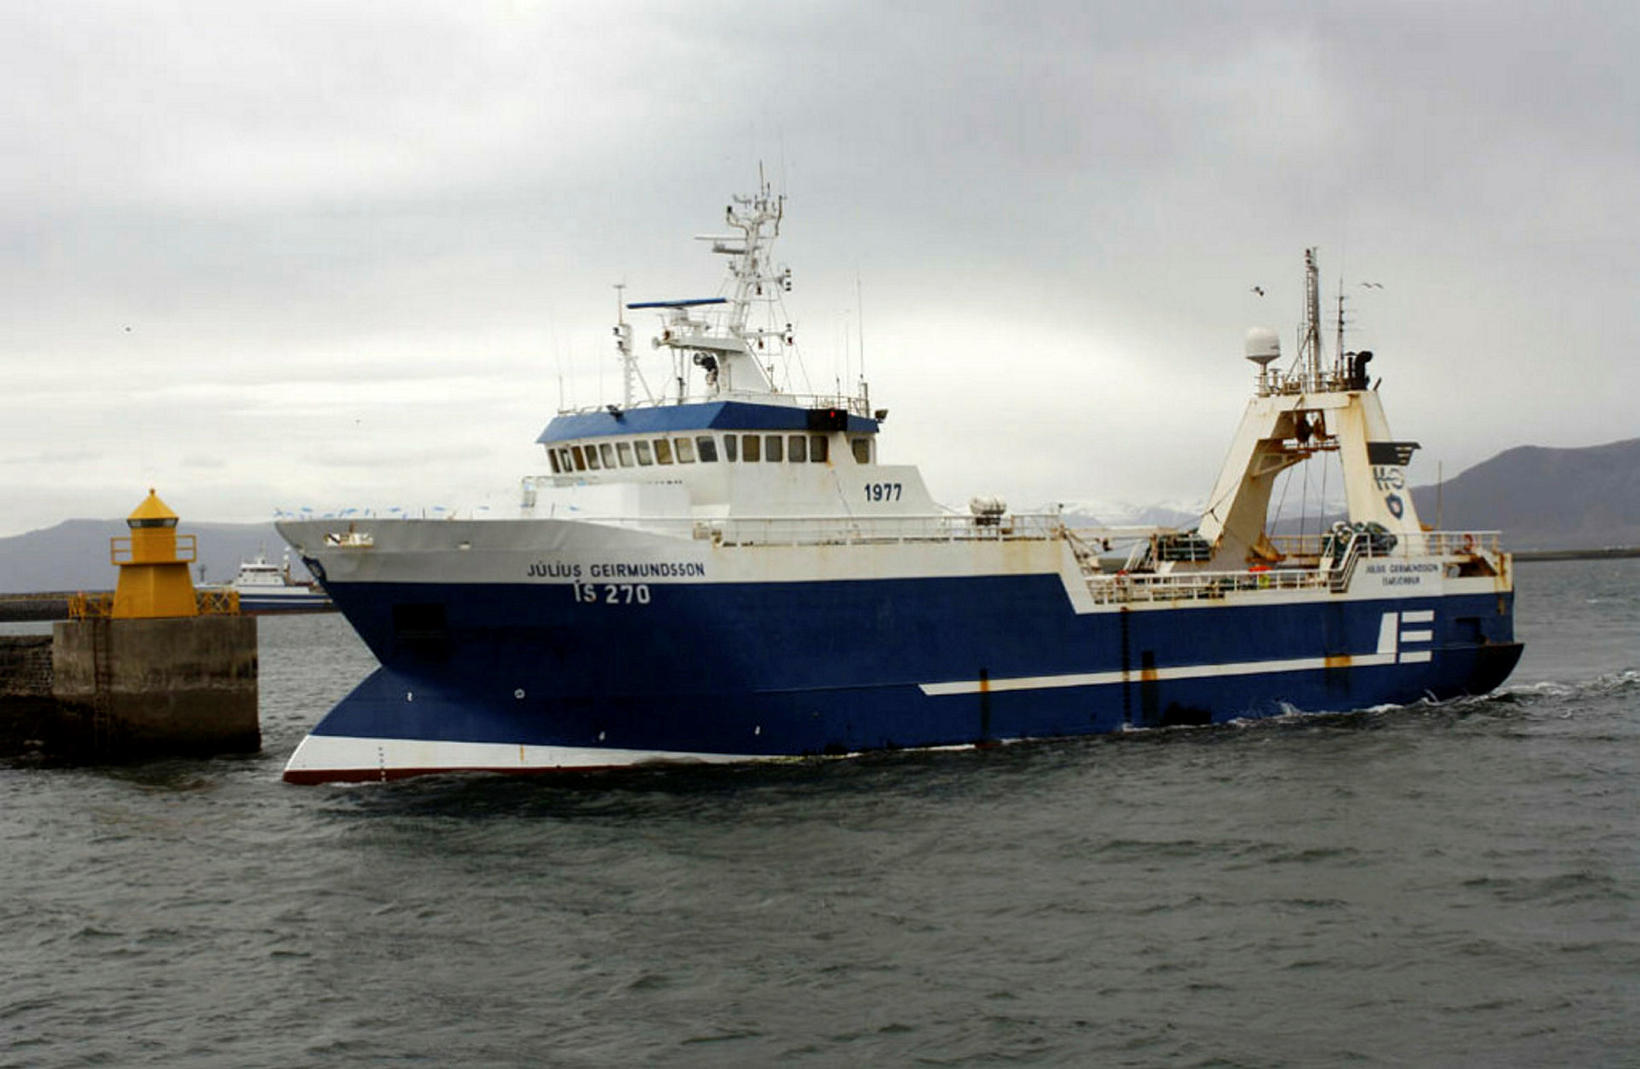 The trawler Júlíus Geirmundsson.